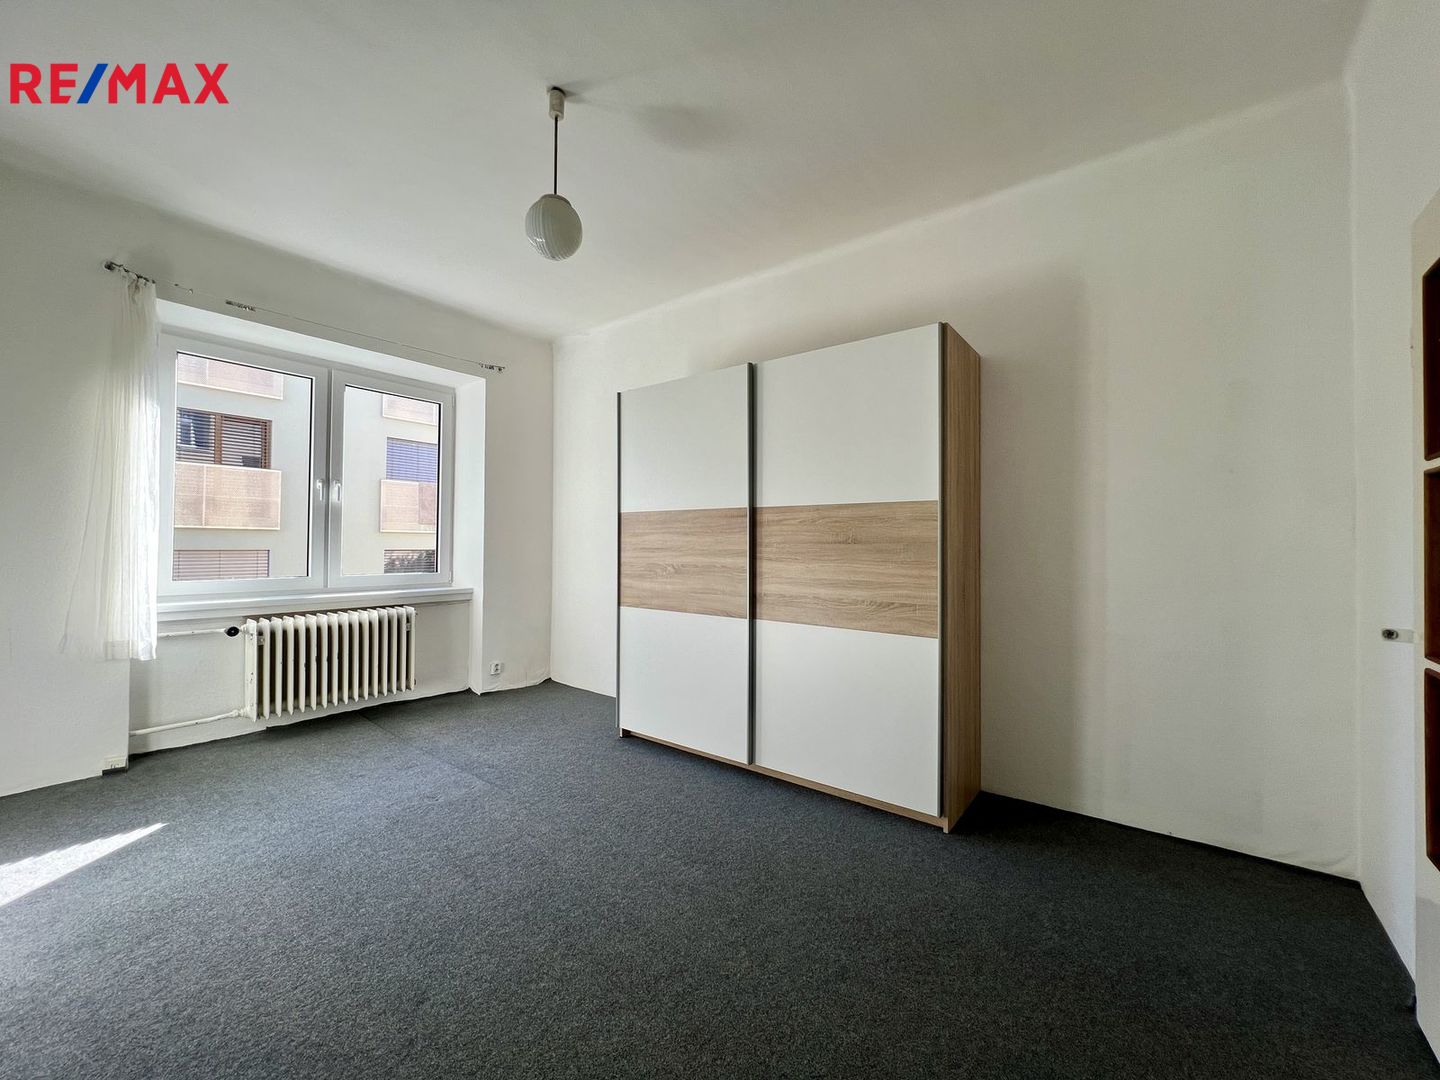 Pronájem bytu 2+1, 57 m2, Brno